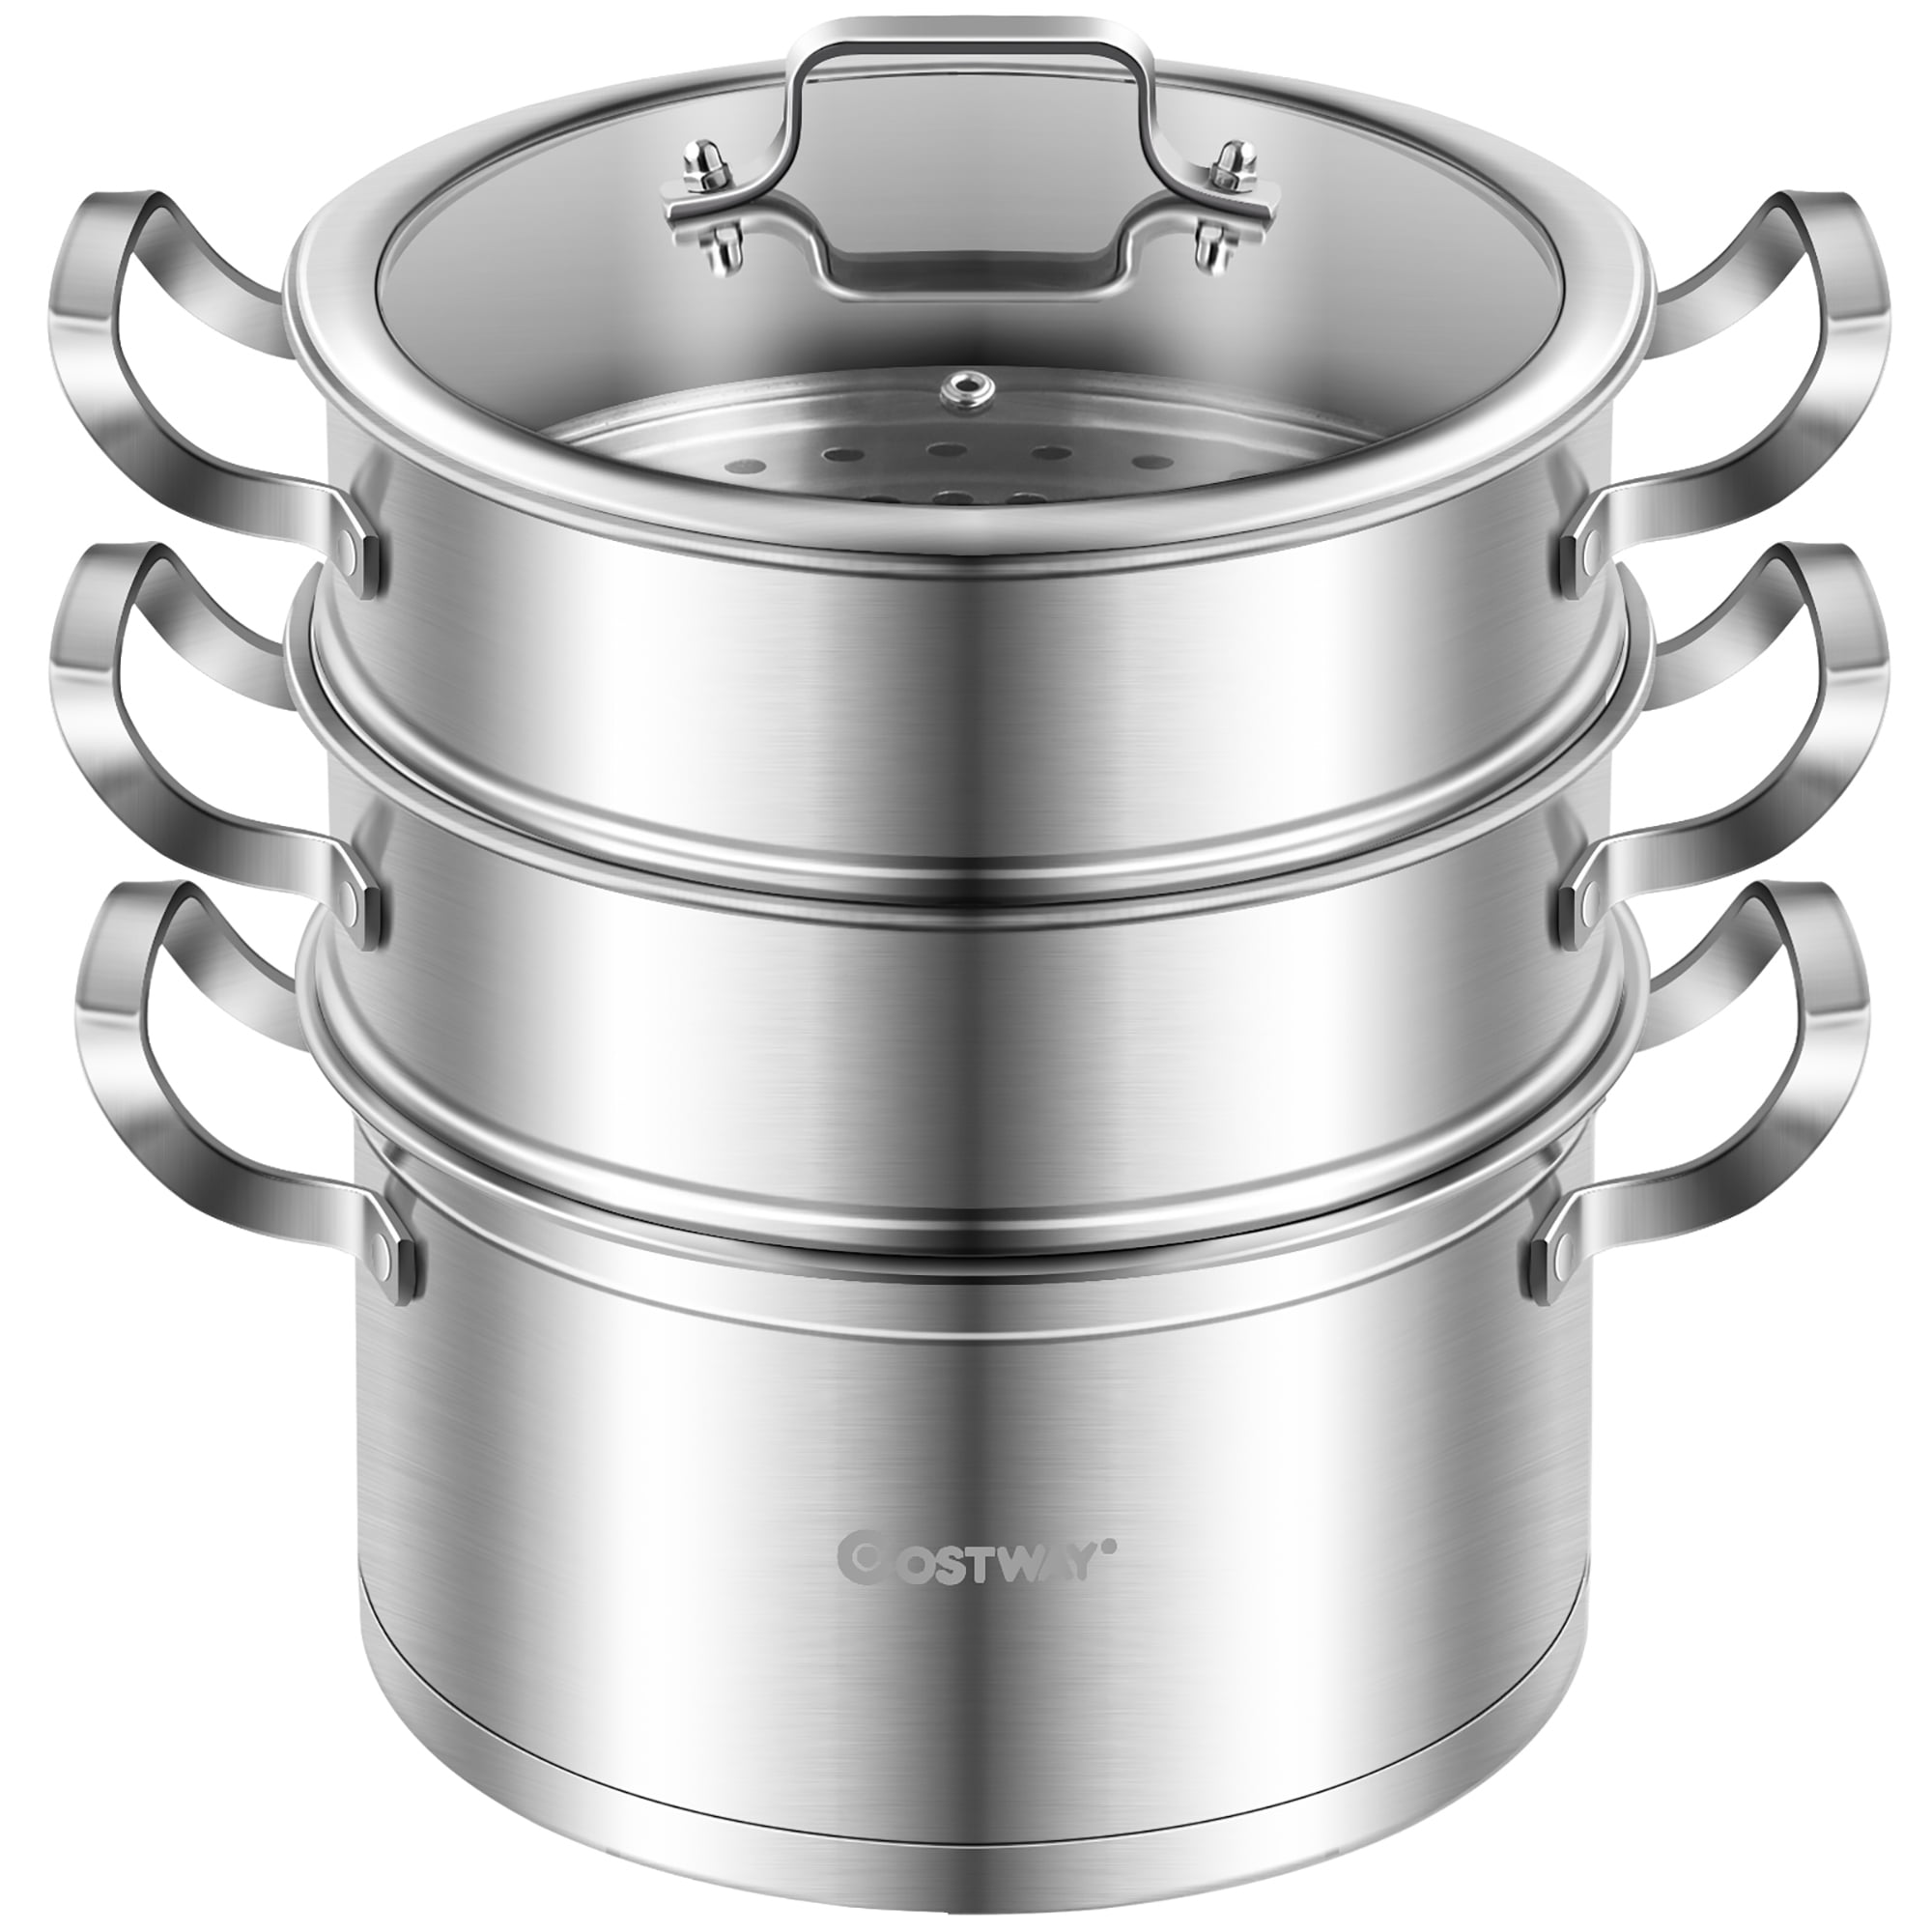 Details about   Steamer Cooker Pot Set Stainless Steel Cooker  Plus  Glass Lid  Dishwasher safe 